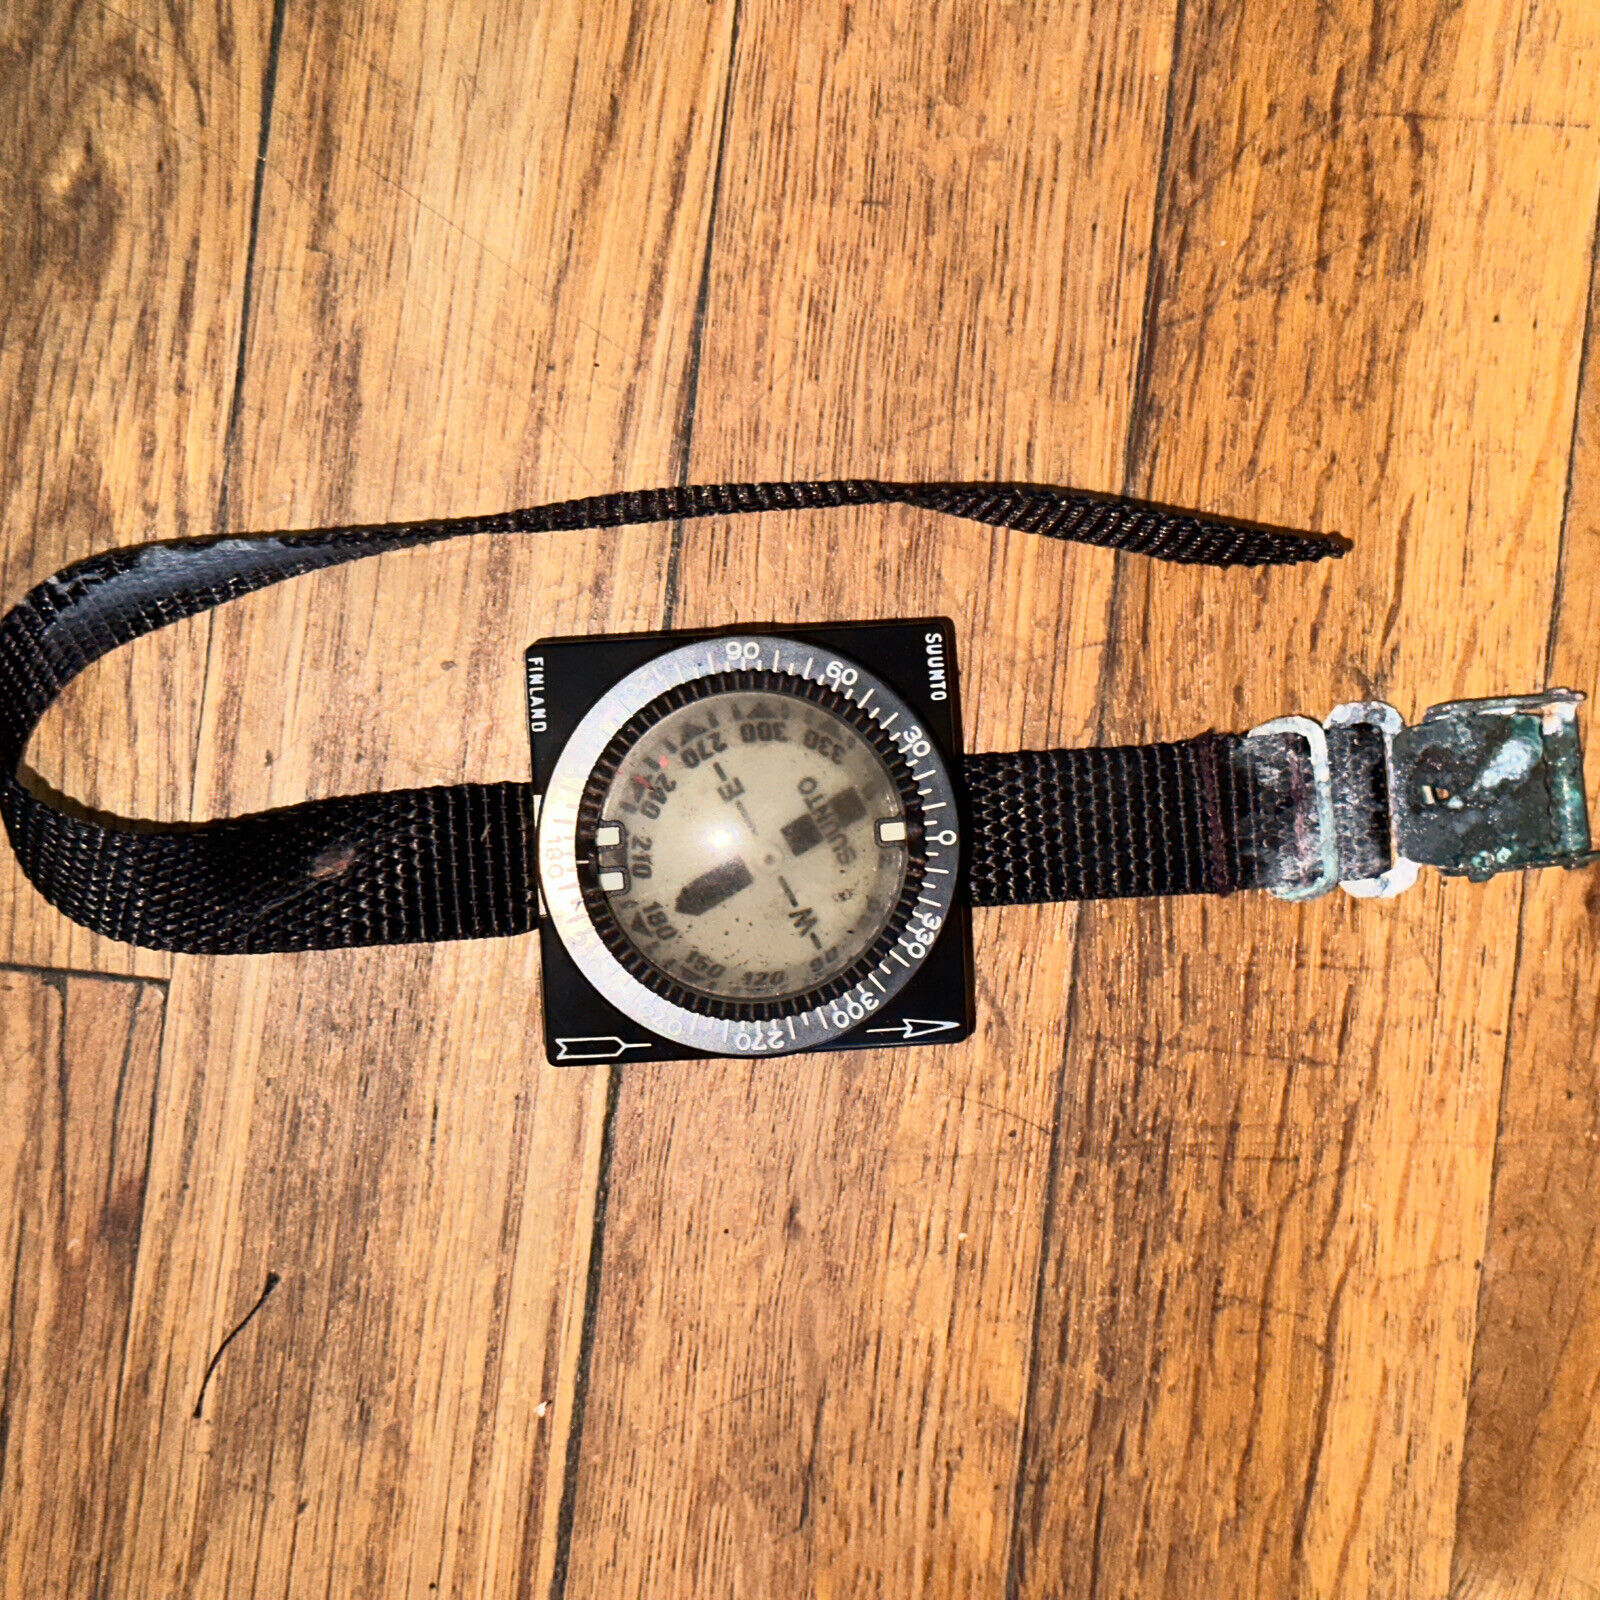 Suunto Vintage Scuba Dive Diving Wrist Compass Made in Finland